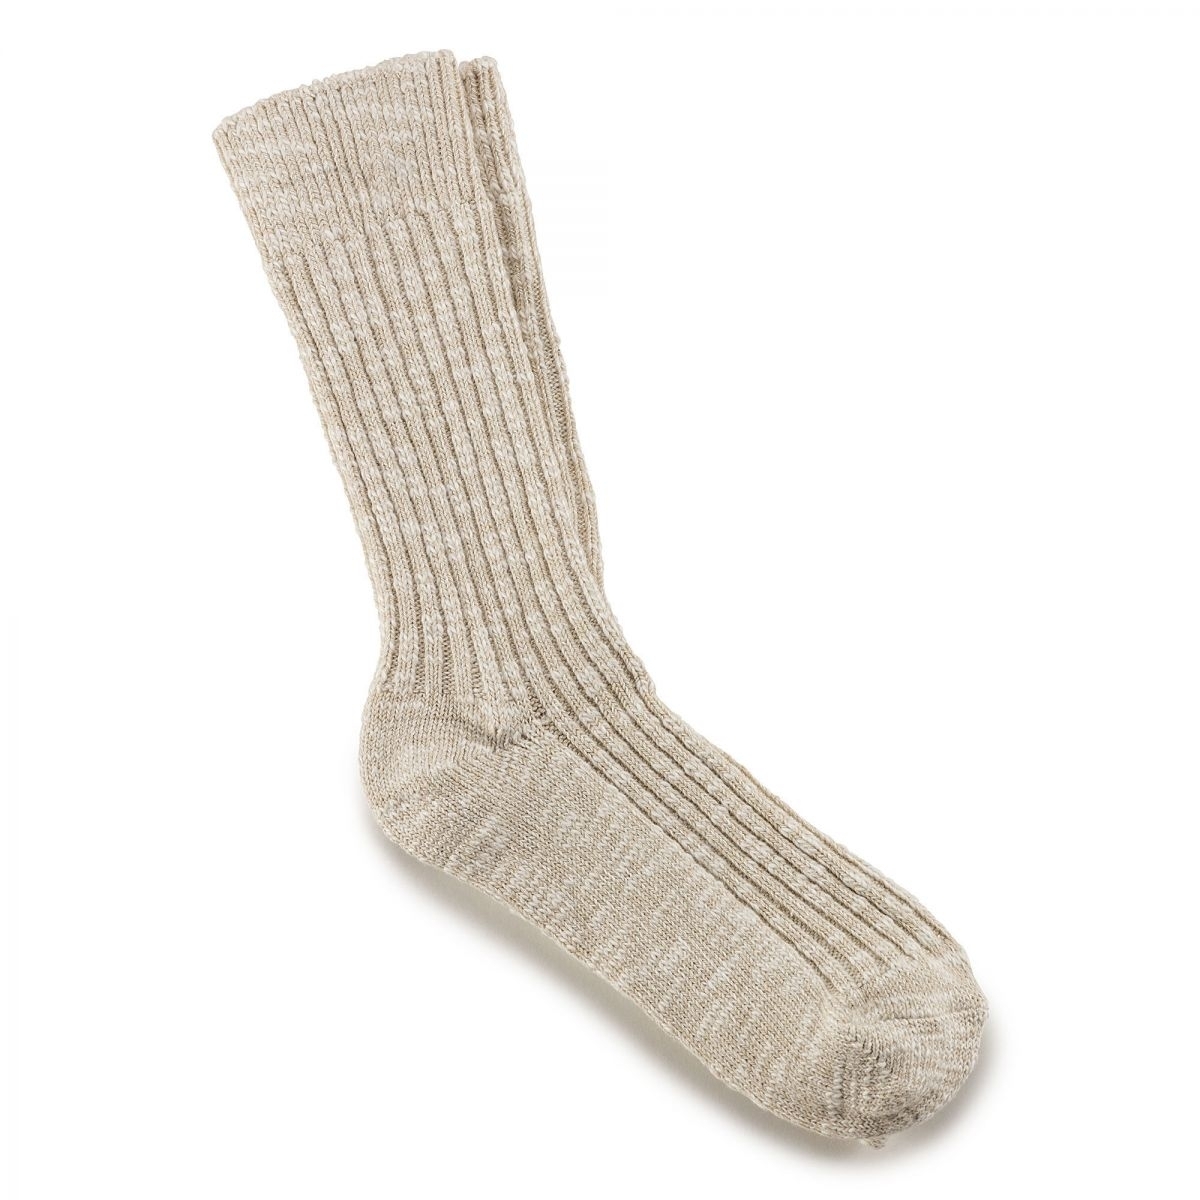 BIRKENSTOCK Women's Cotton Slub Socks Beige/White - 1008033 BEIGE - BEIGE, Medium